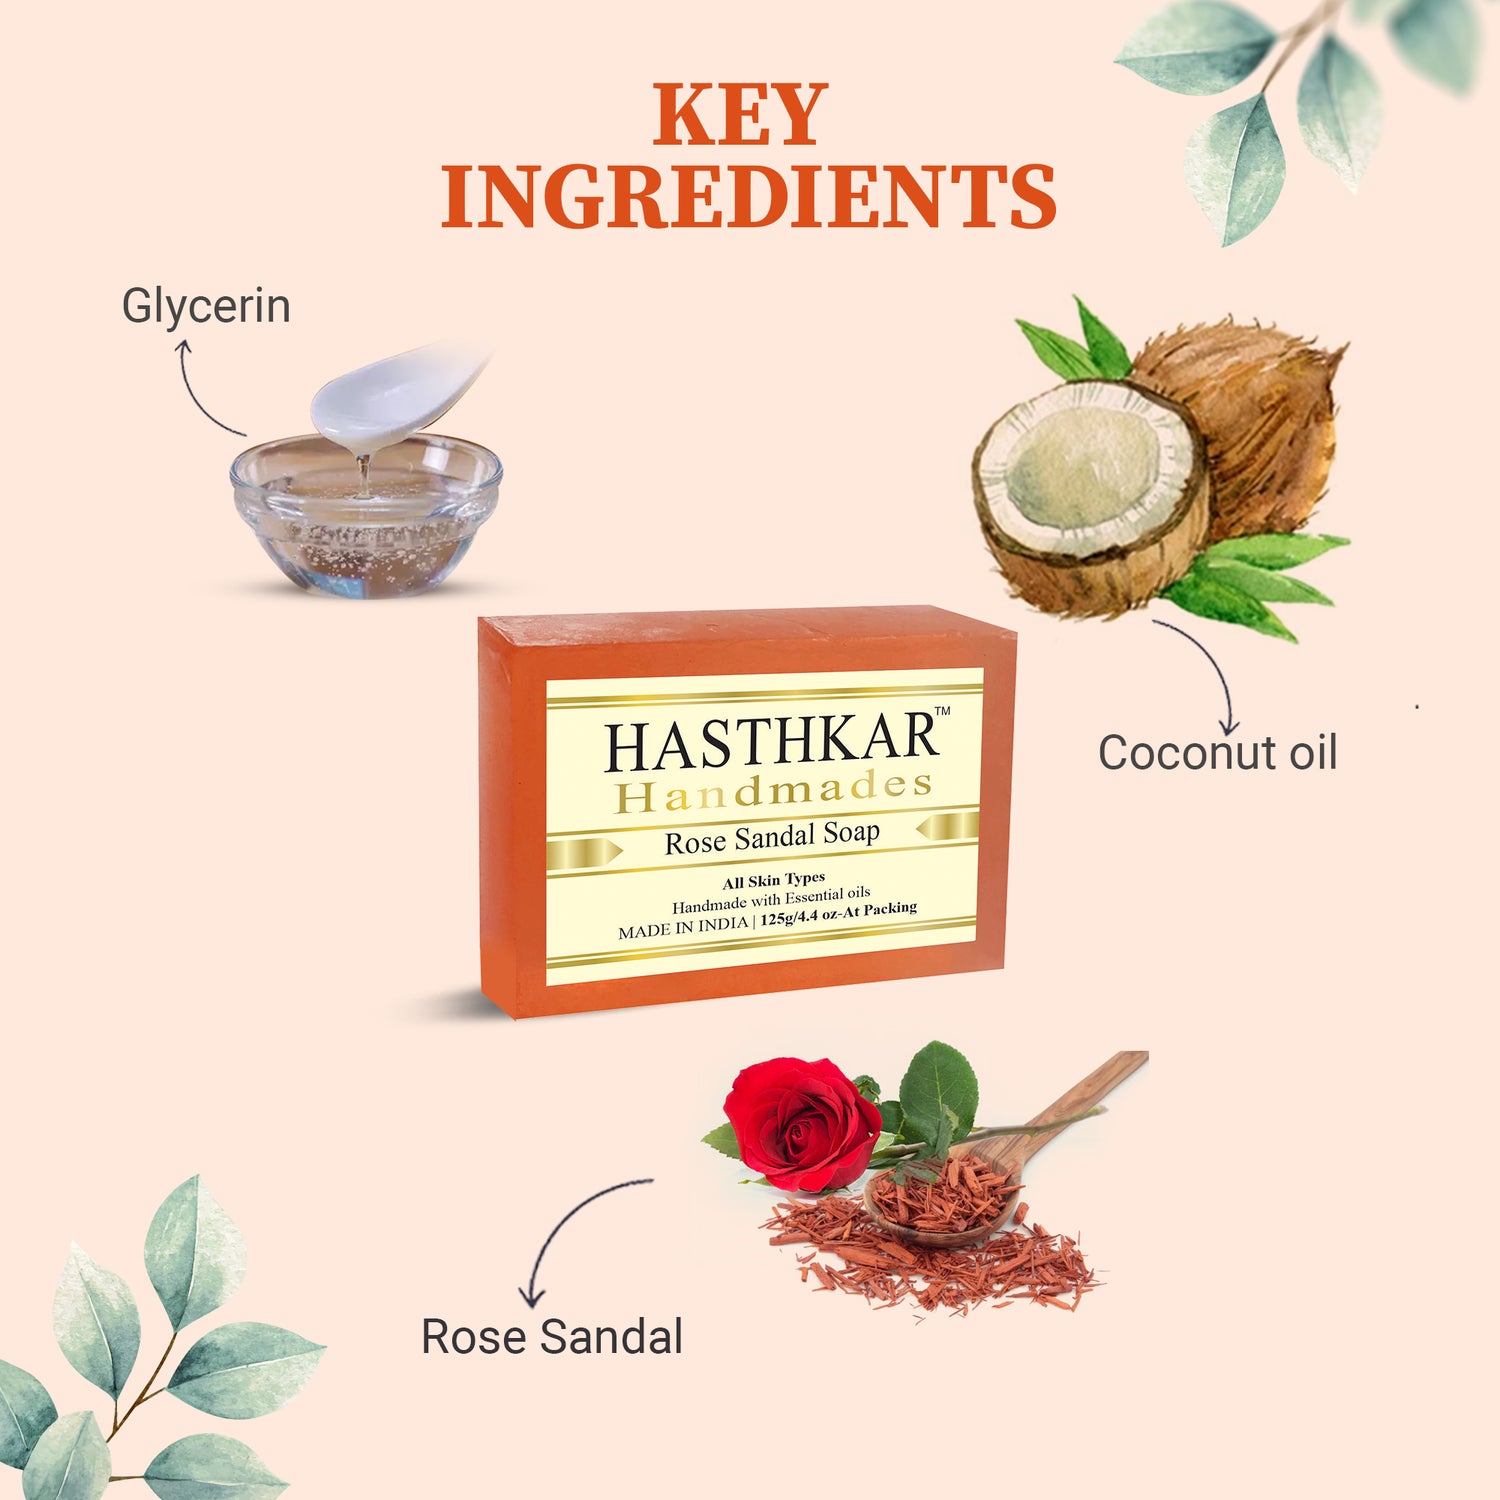 images of Hasthkar handmades rose sandal bathing soap key ingredients 